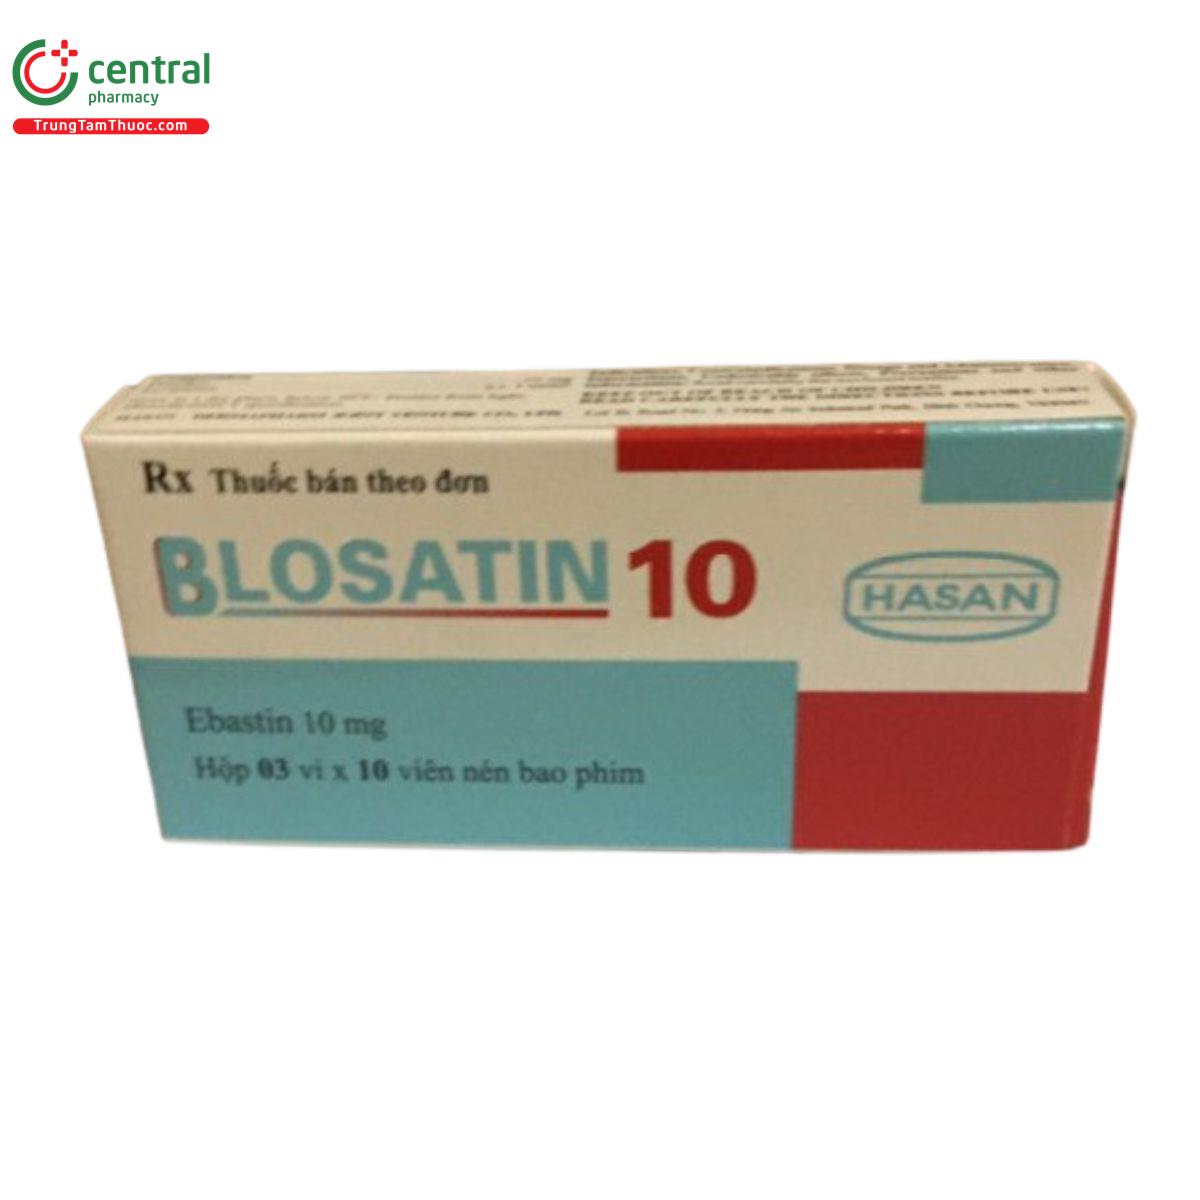 blosatin 10 4 M5138